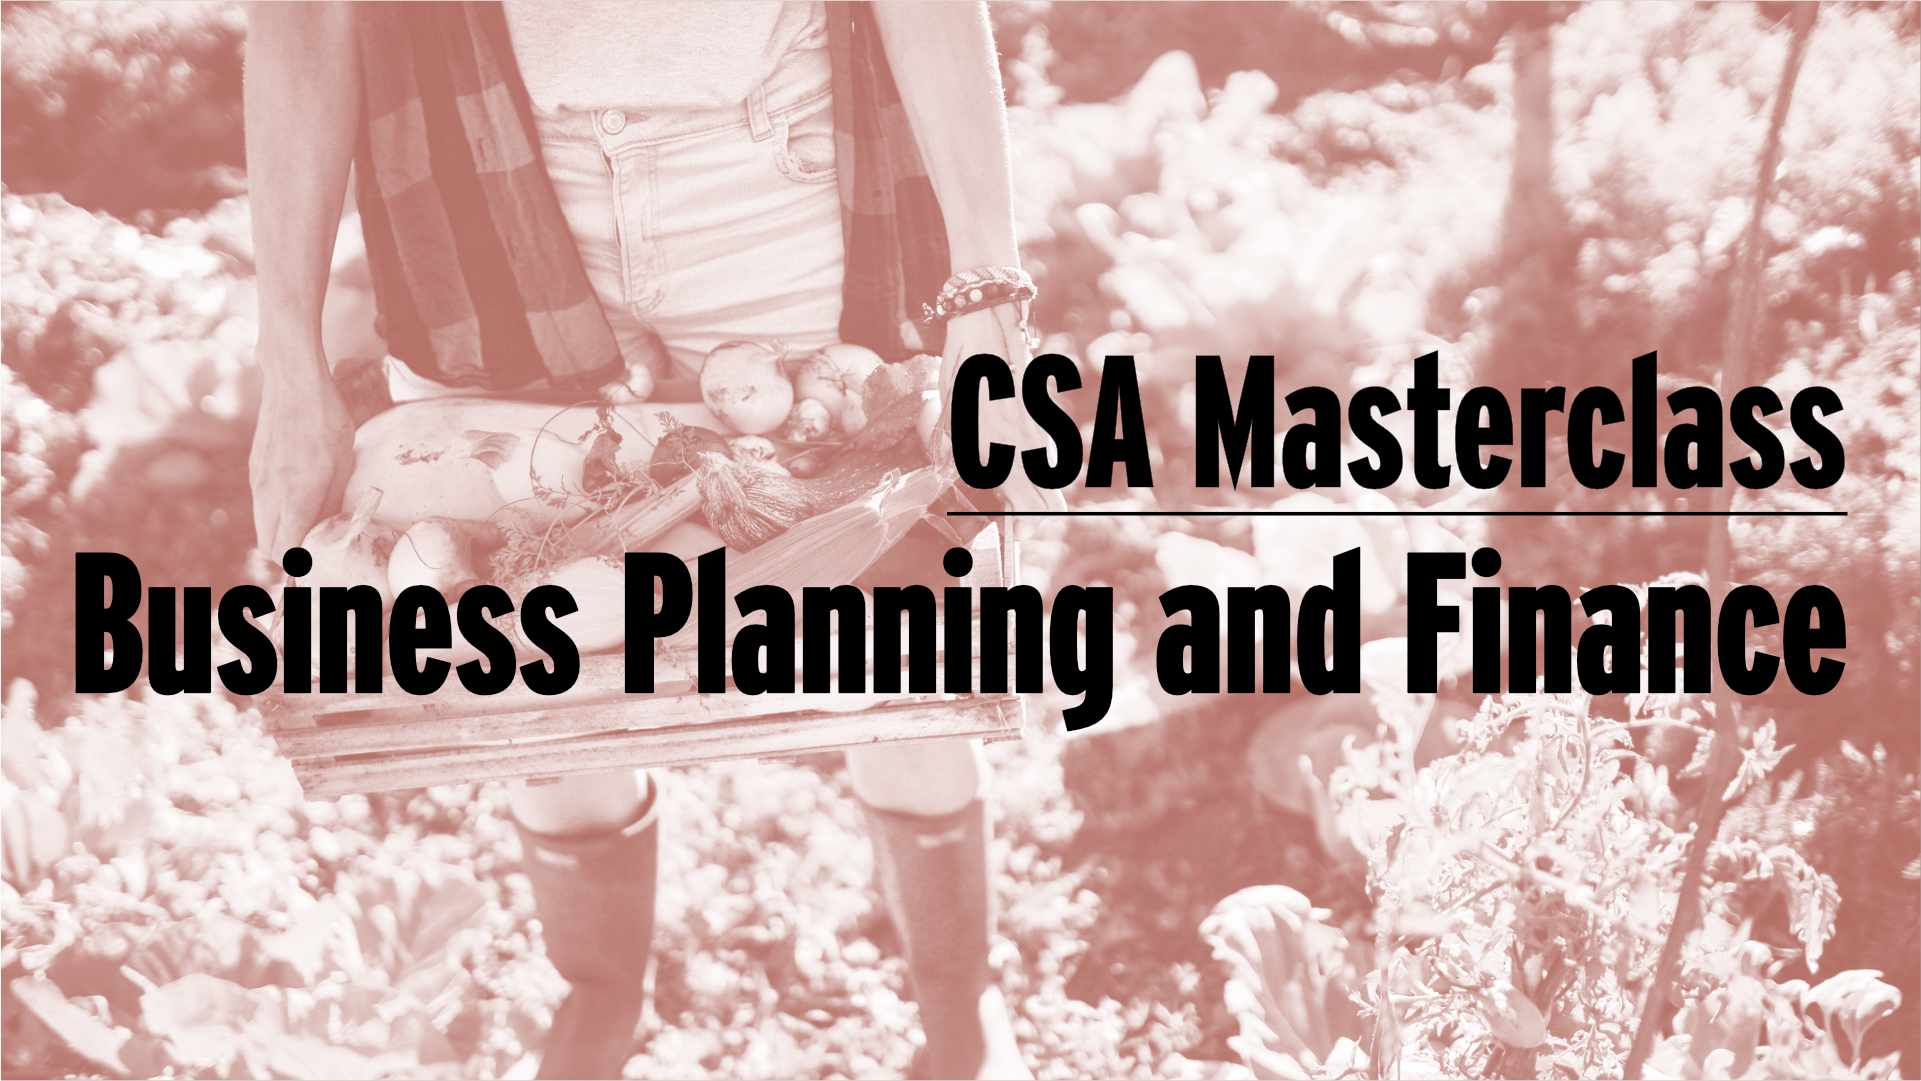 Masterclass CSA Business and Finance Image